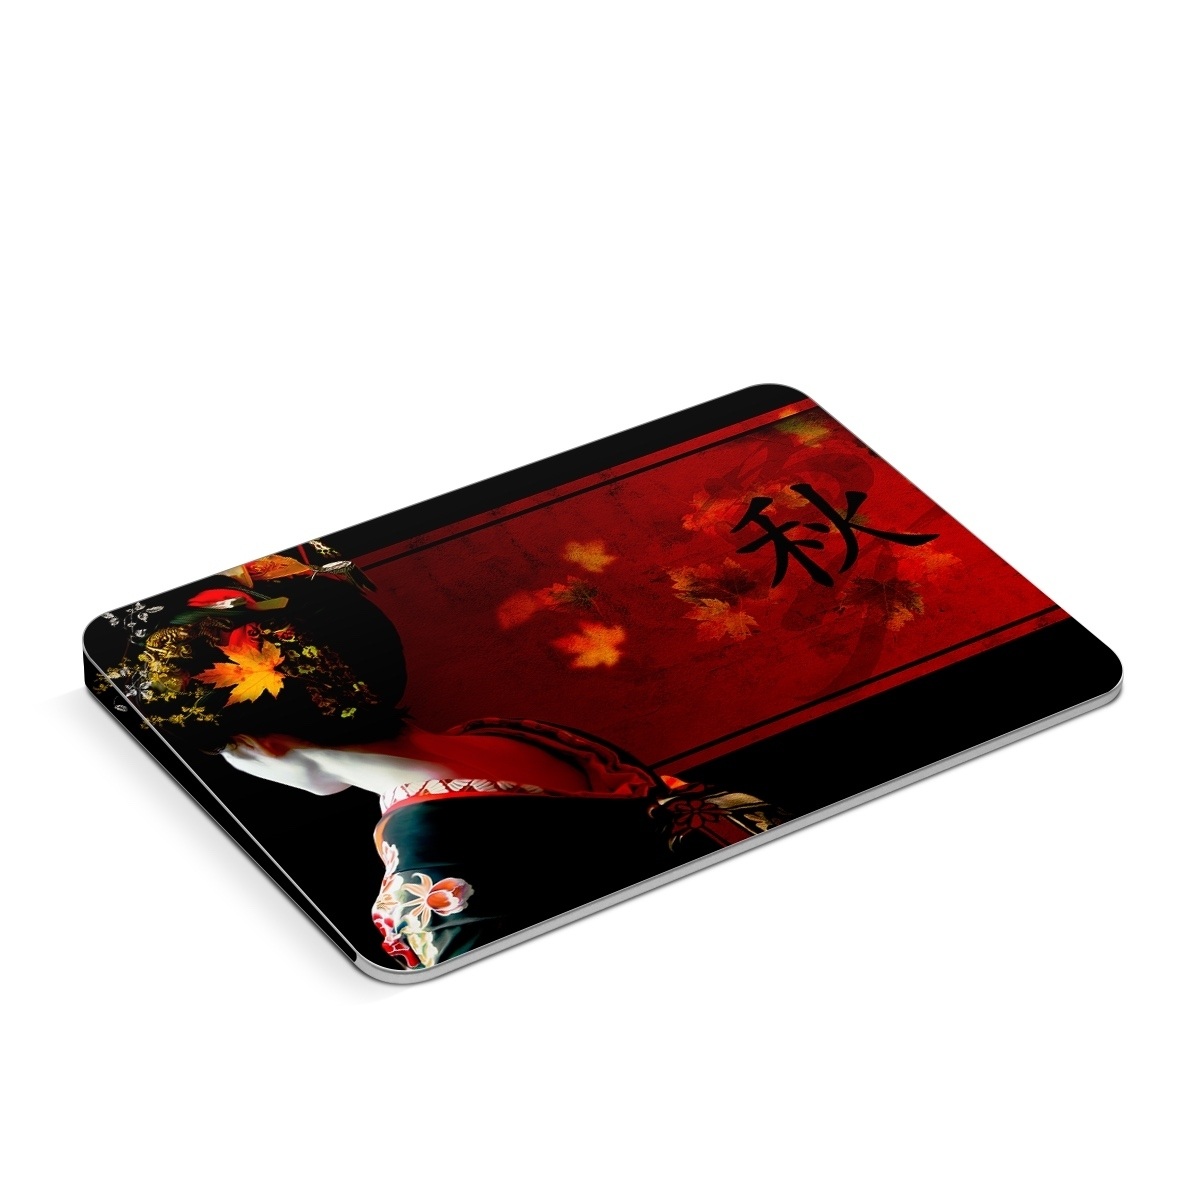 Apple Magic Trackpad Skin design of Geisha, Red, Flower, Plant, Headgear, Photography, Peking opera, Costume, Headpiece, Art, with black, red, orange, yellow, white colors